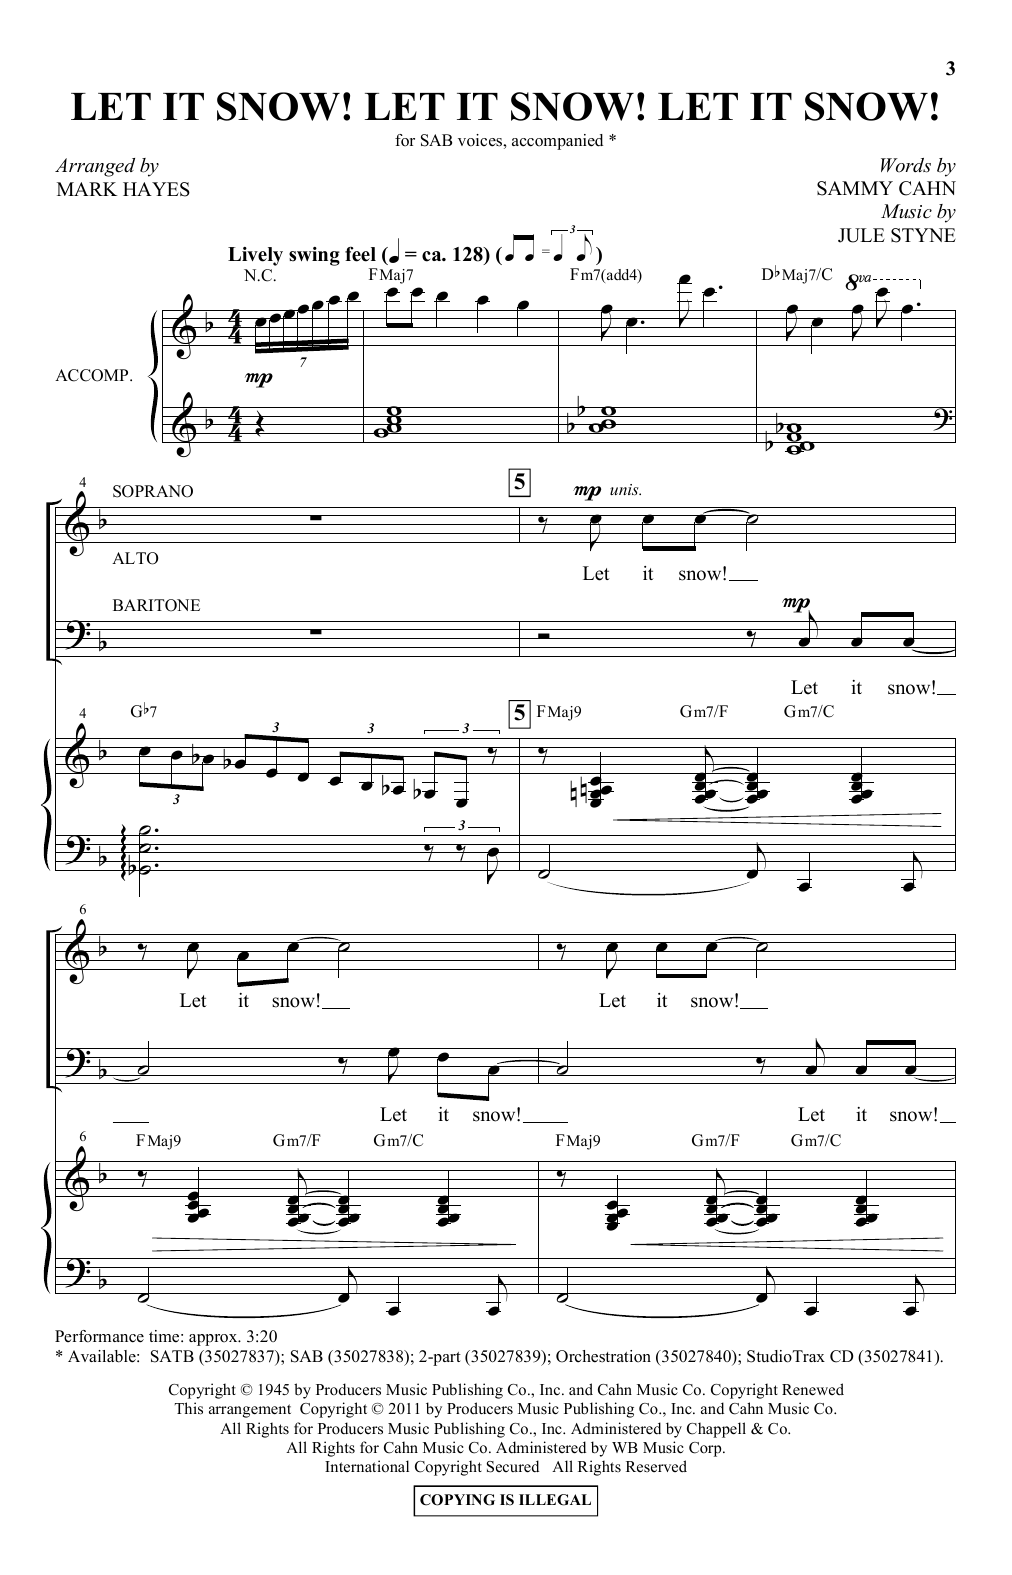 Sammy Cahn & Julie Styne Let It Snow! Let It Snow! Let It Snow! Sheet Music Notes & Chords for SATB Choir - Download or Print PDF